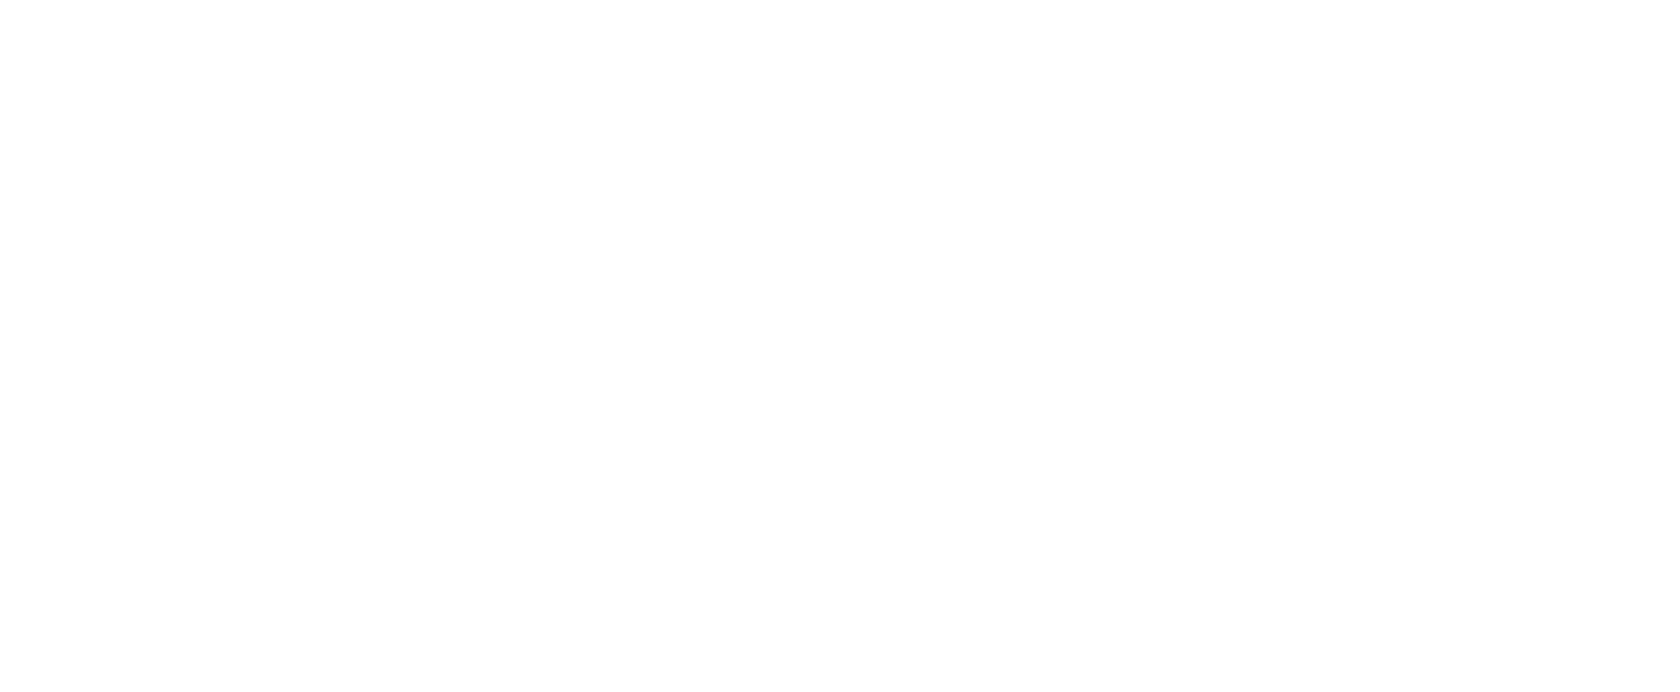 Логотип Микоян. Брендинговое агентство ForceGear.